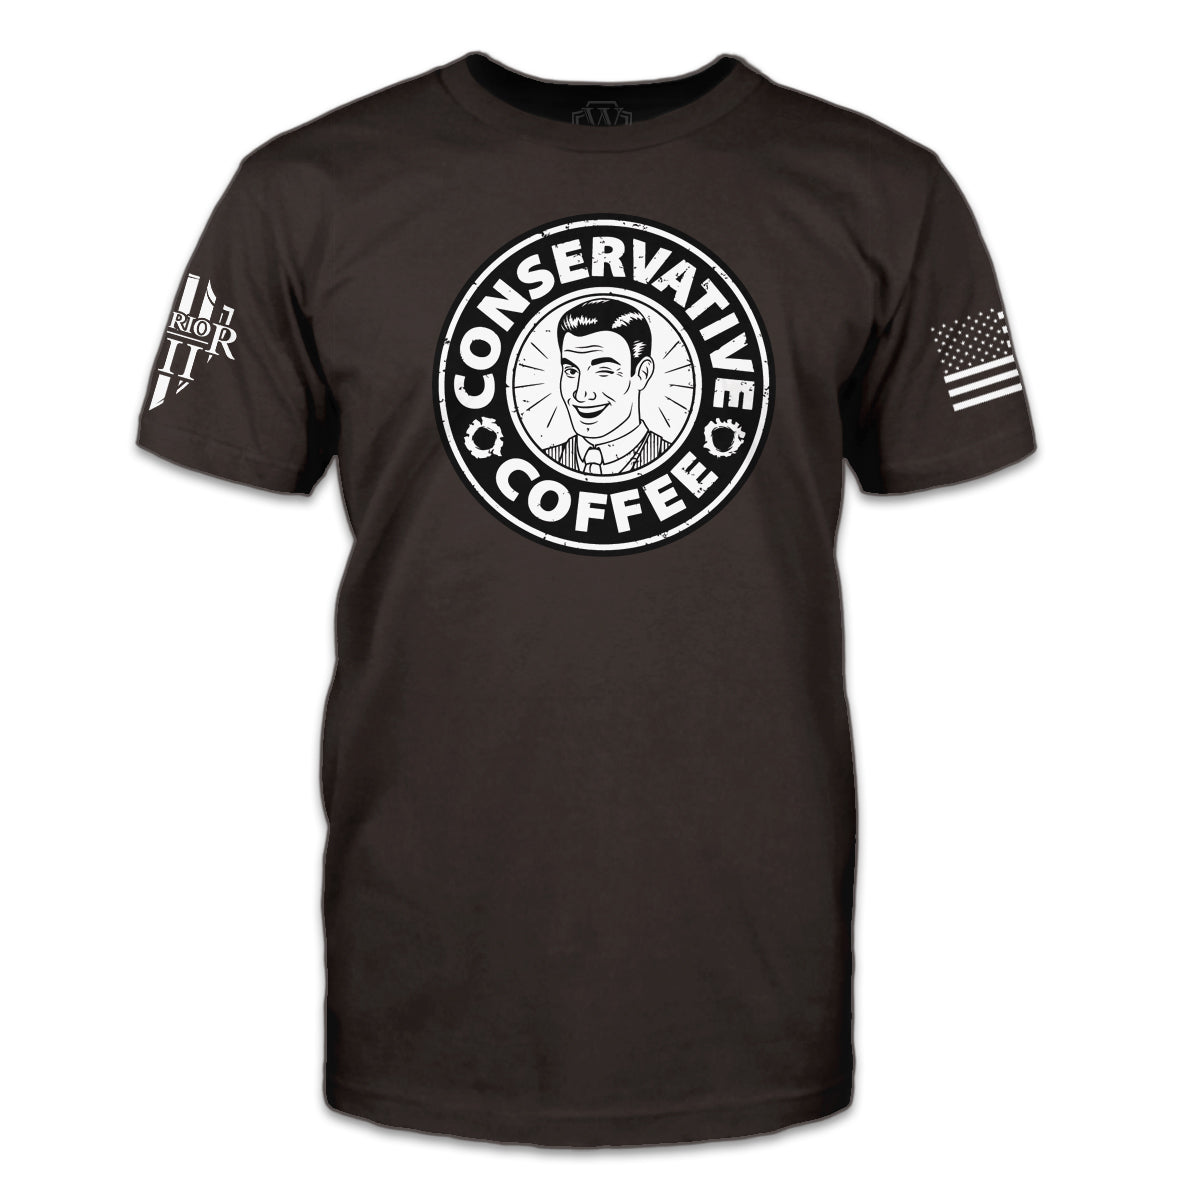 Conservative Coffee Shirt